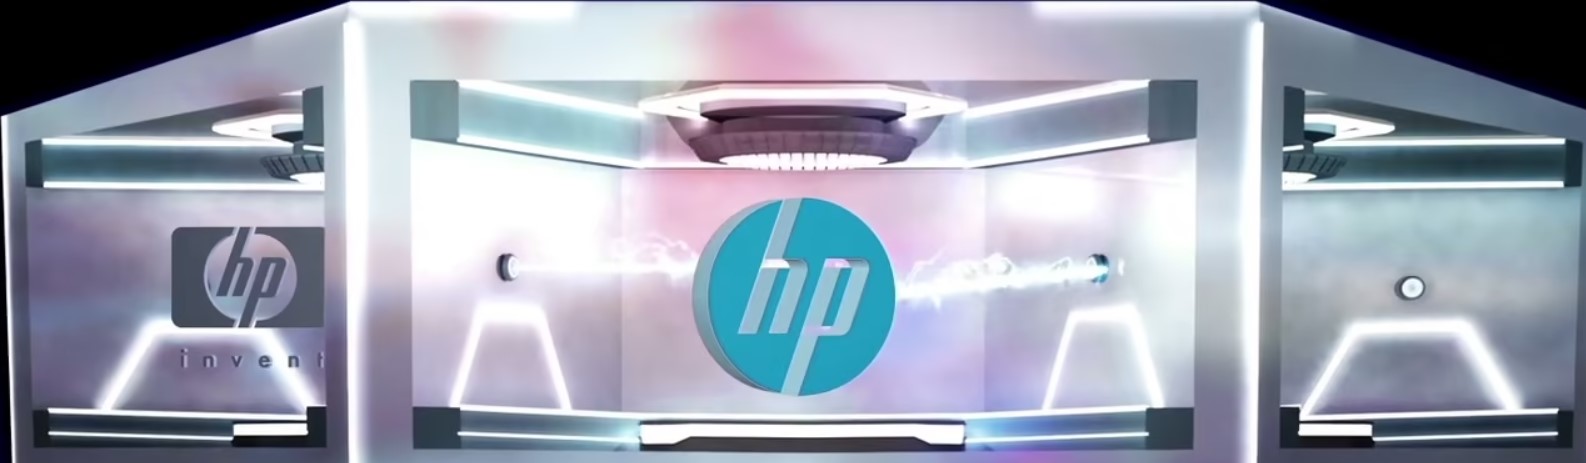 HP Supplies Summit in Osaka